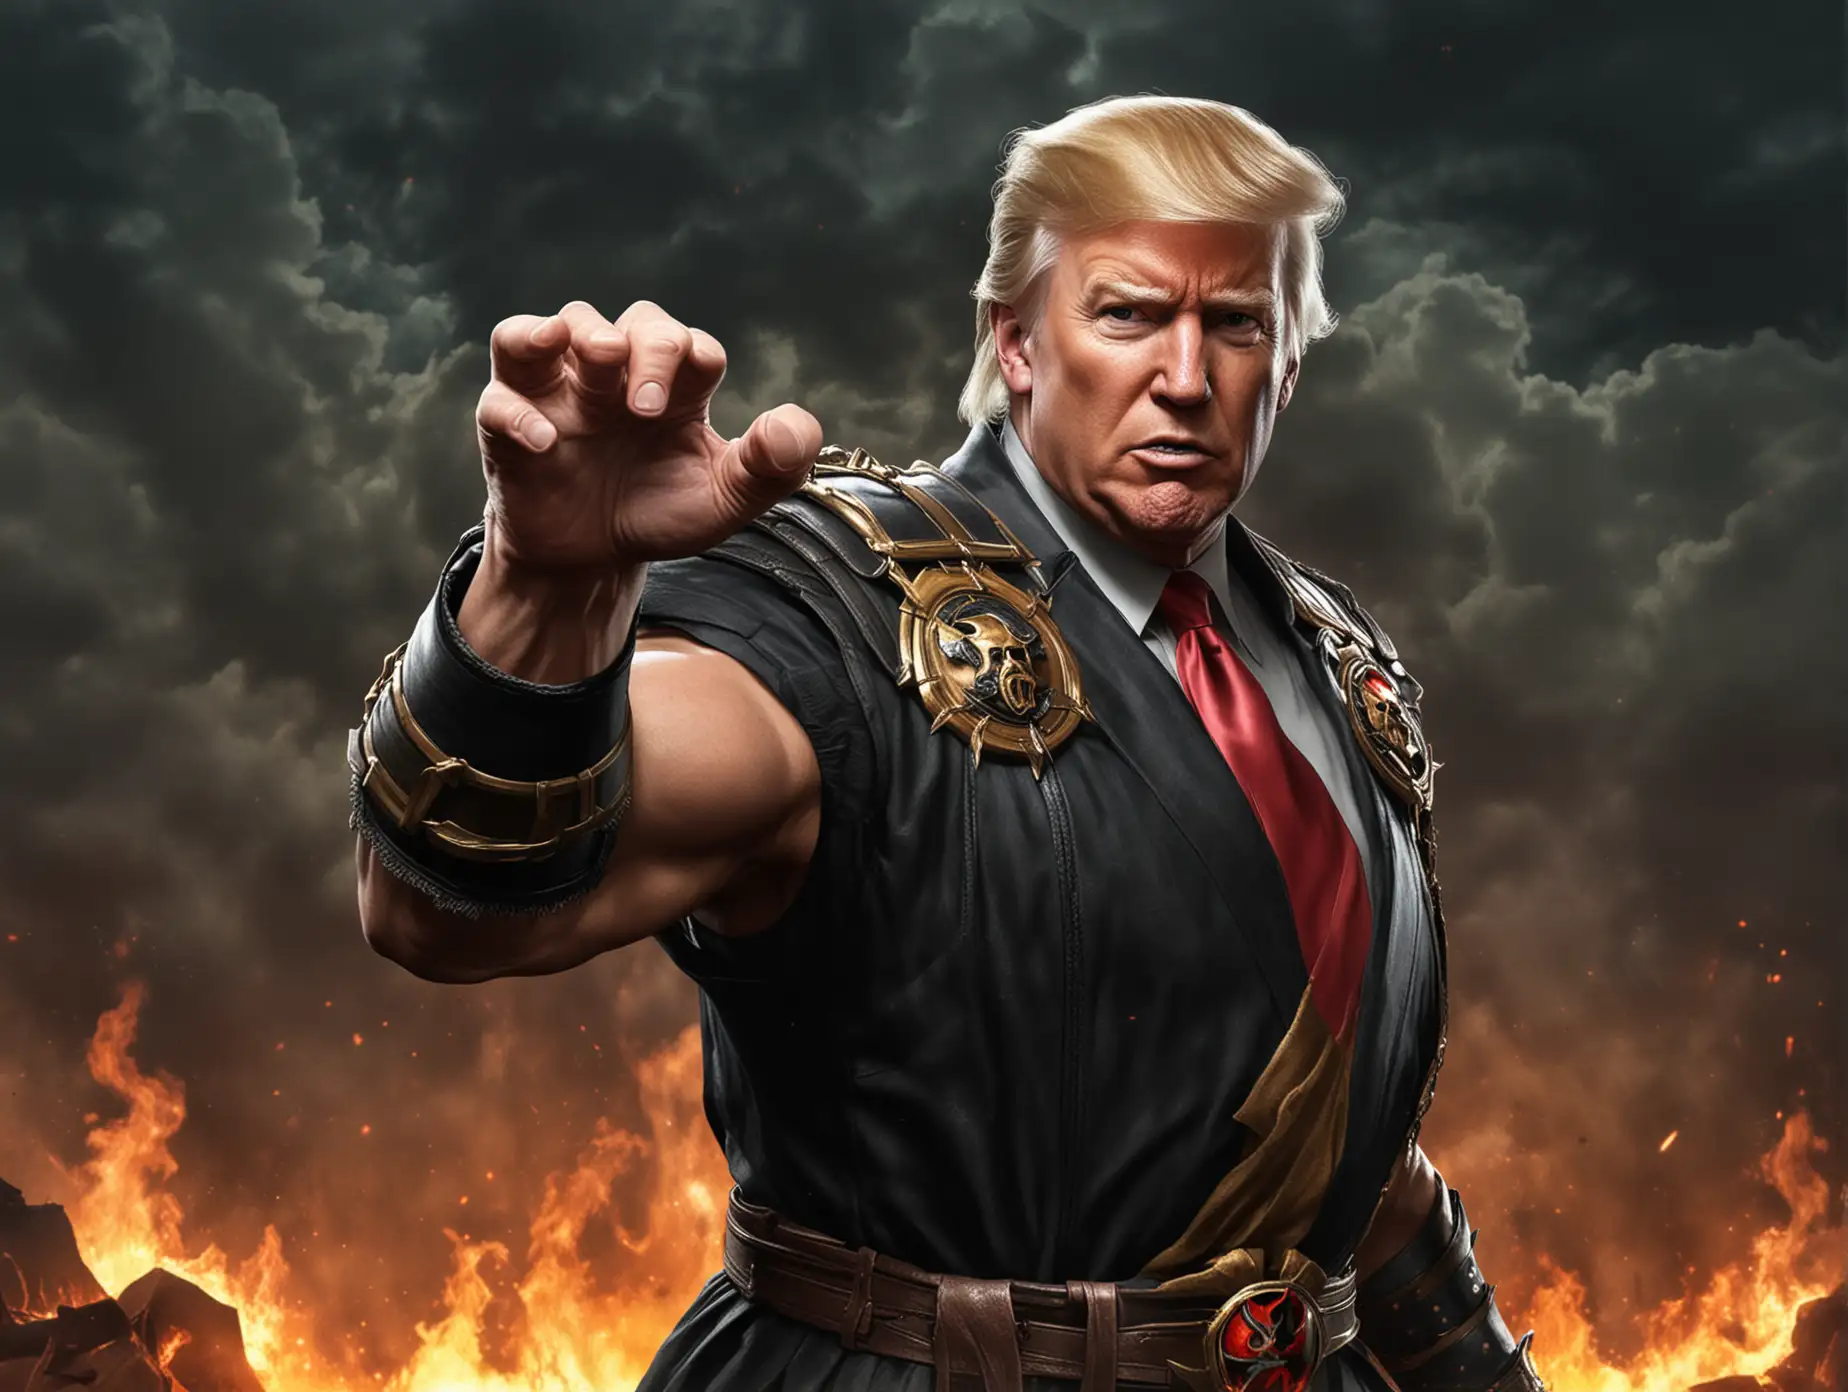 Donald Trump Mortal Kombat Fatality on Joe Biden